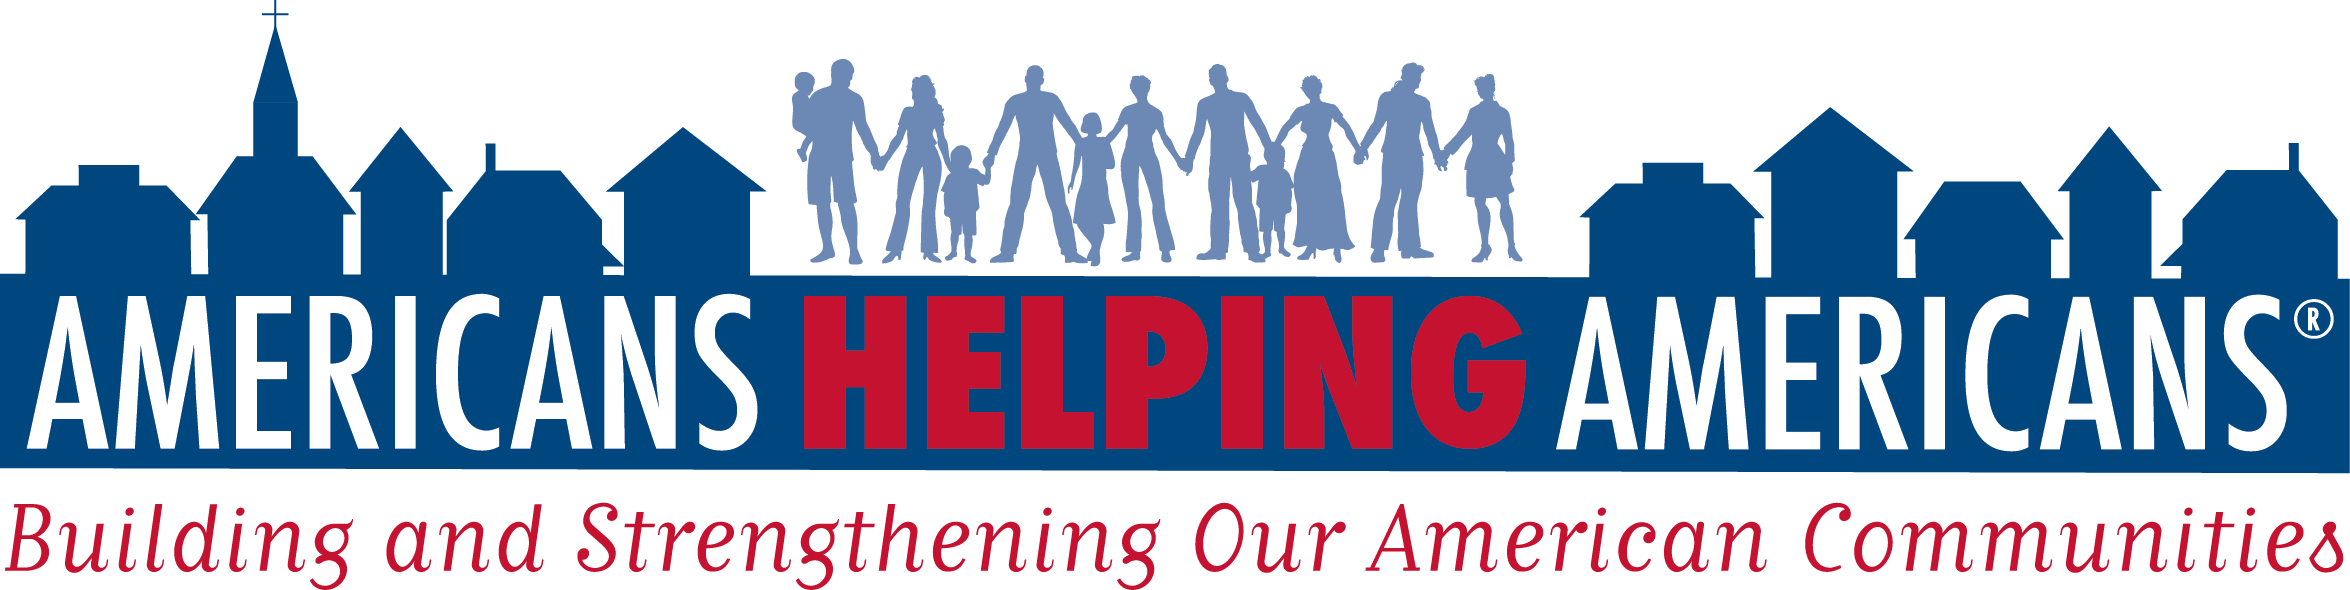 AmericansHelpingAmericans Logo (002).png